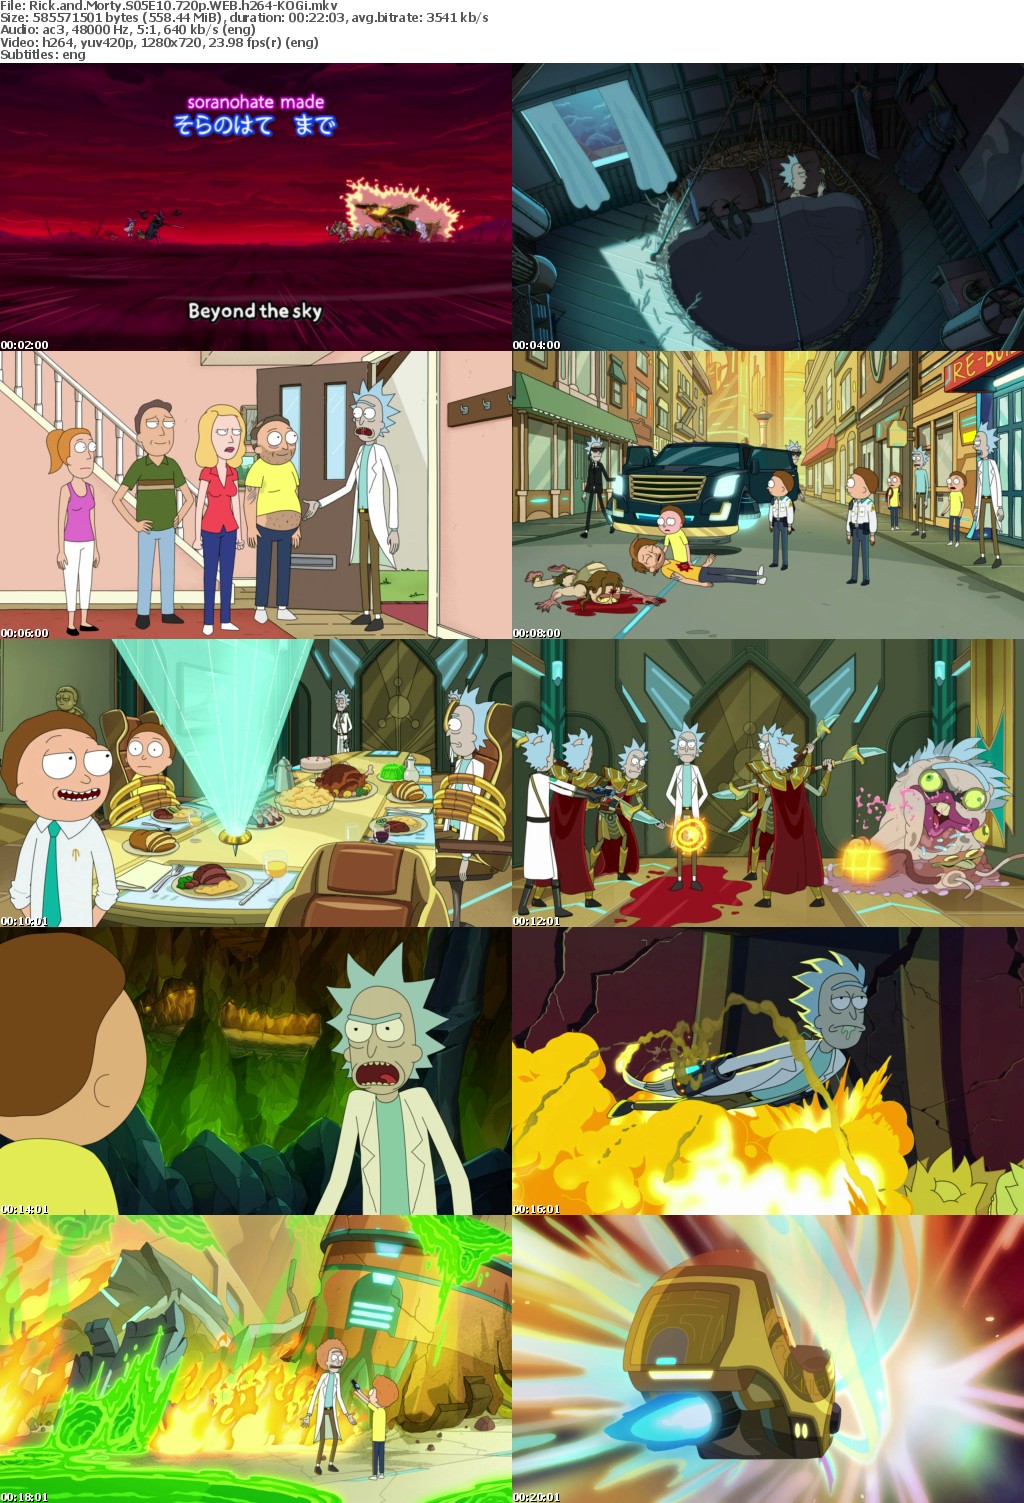 Rick and Morty S05E10 720p WEB h264-KOGi